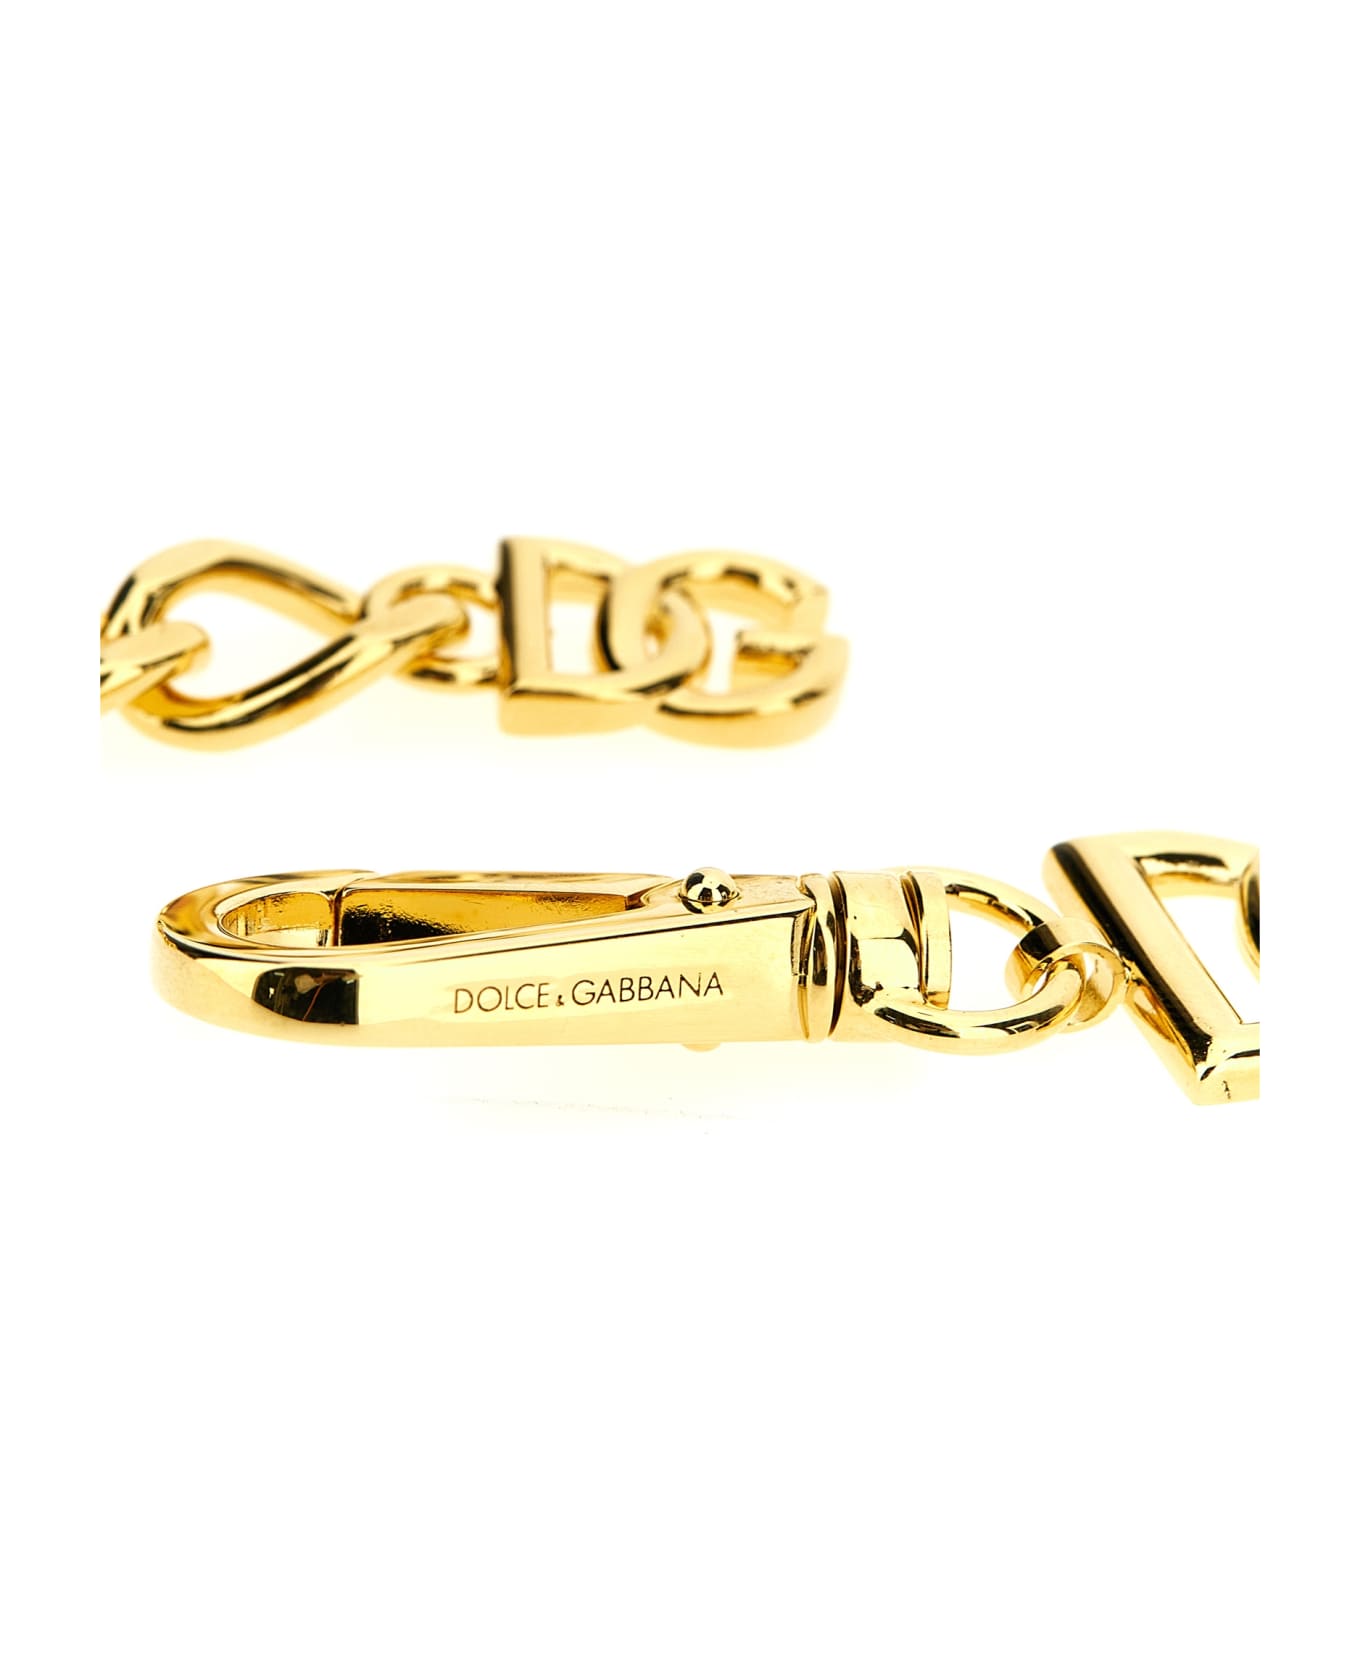 Dolce & Gabbana 'dg' Necklace - Gold